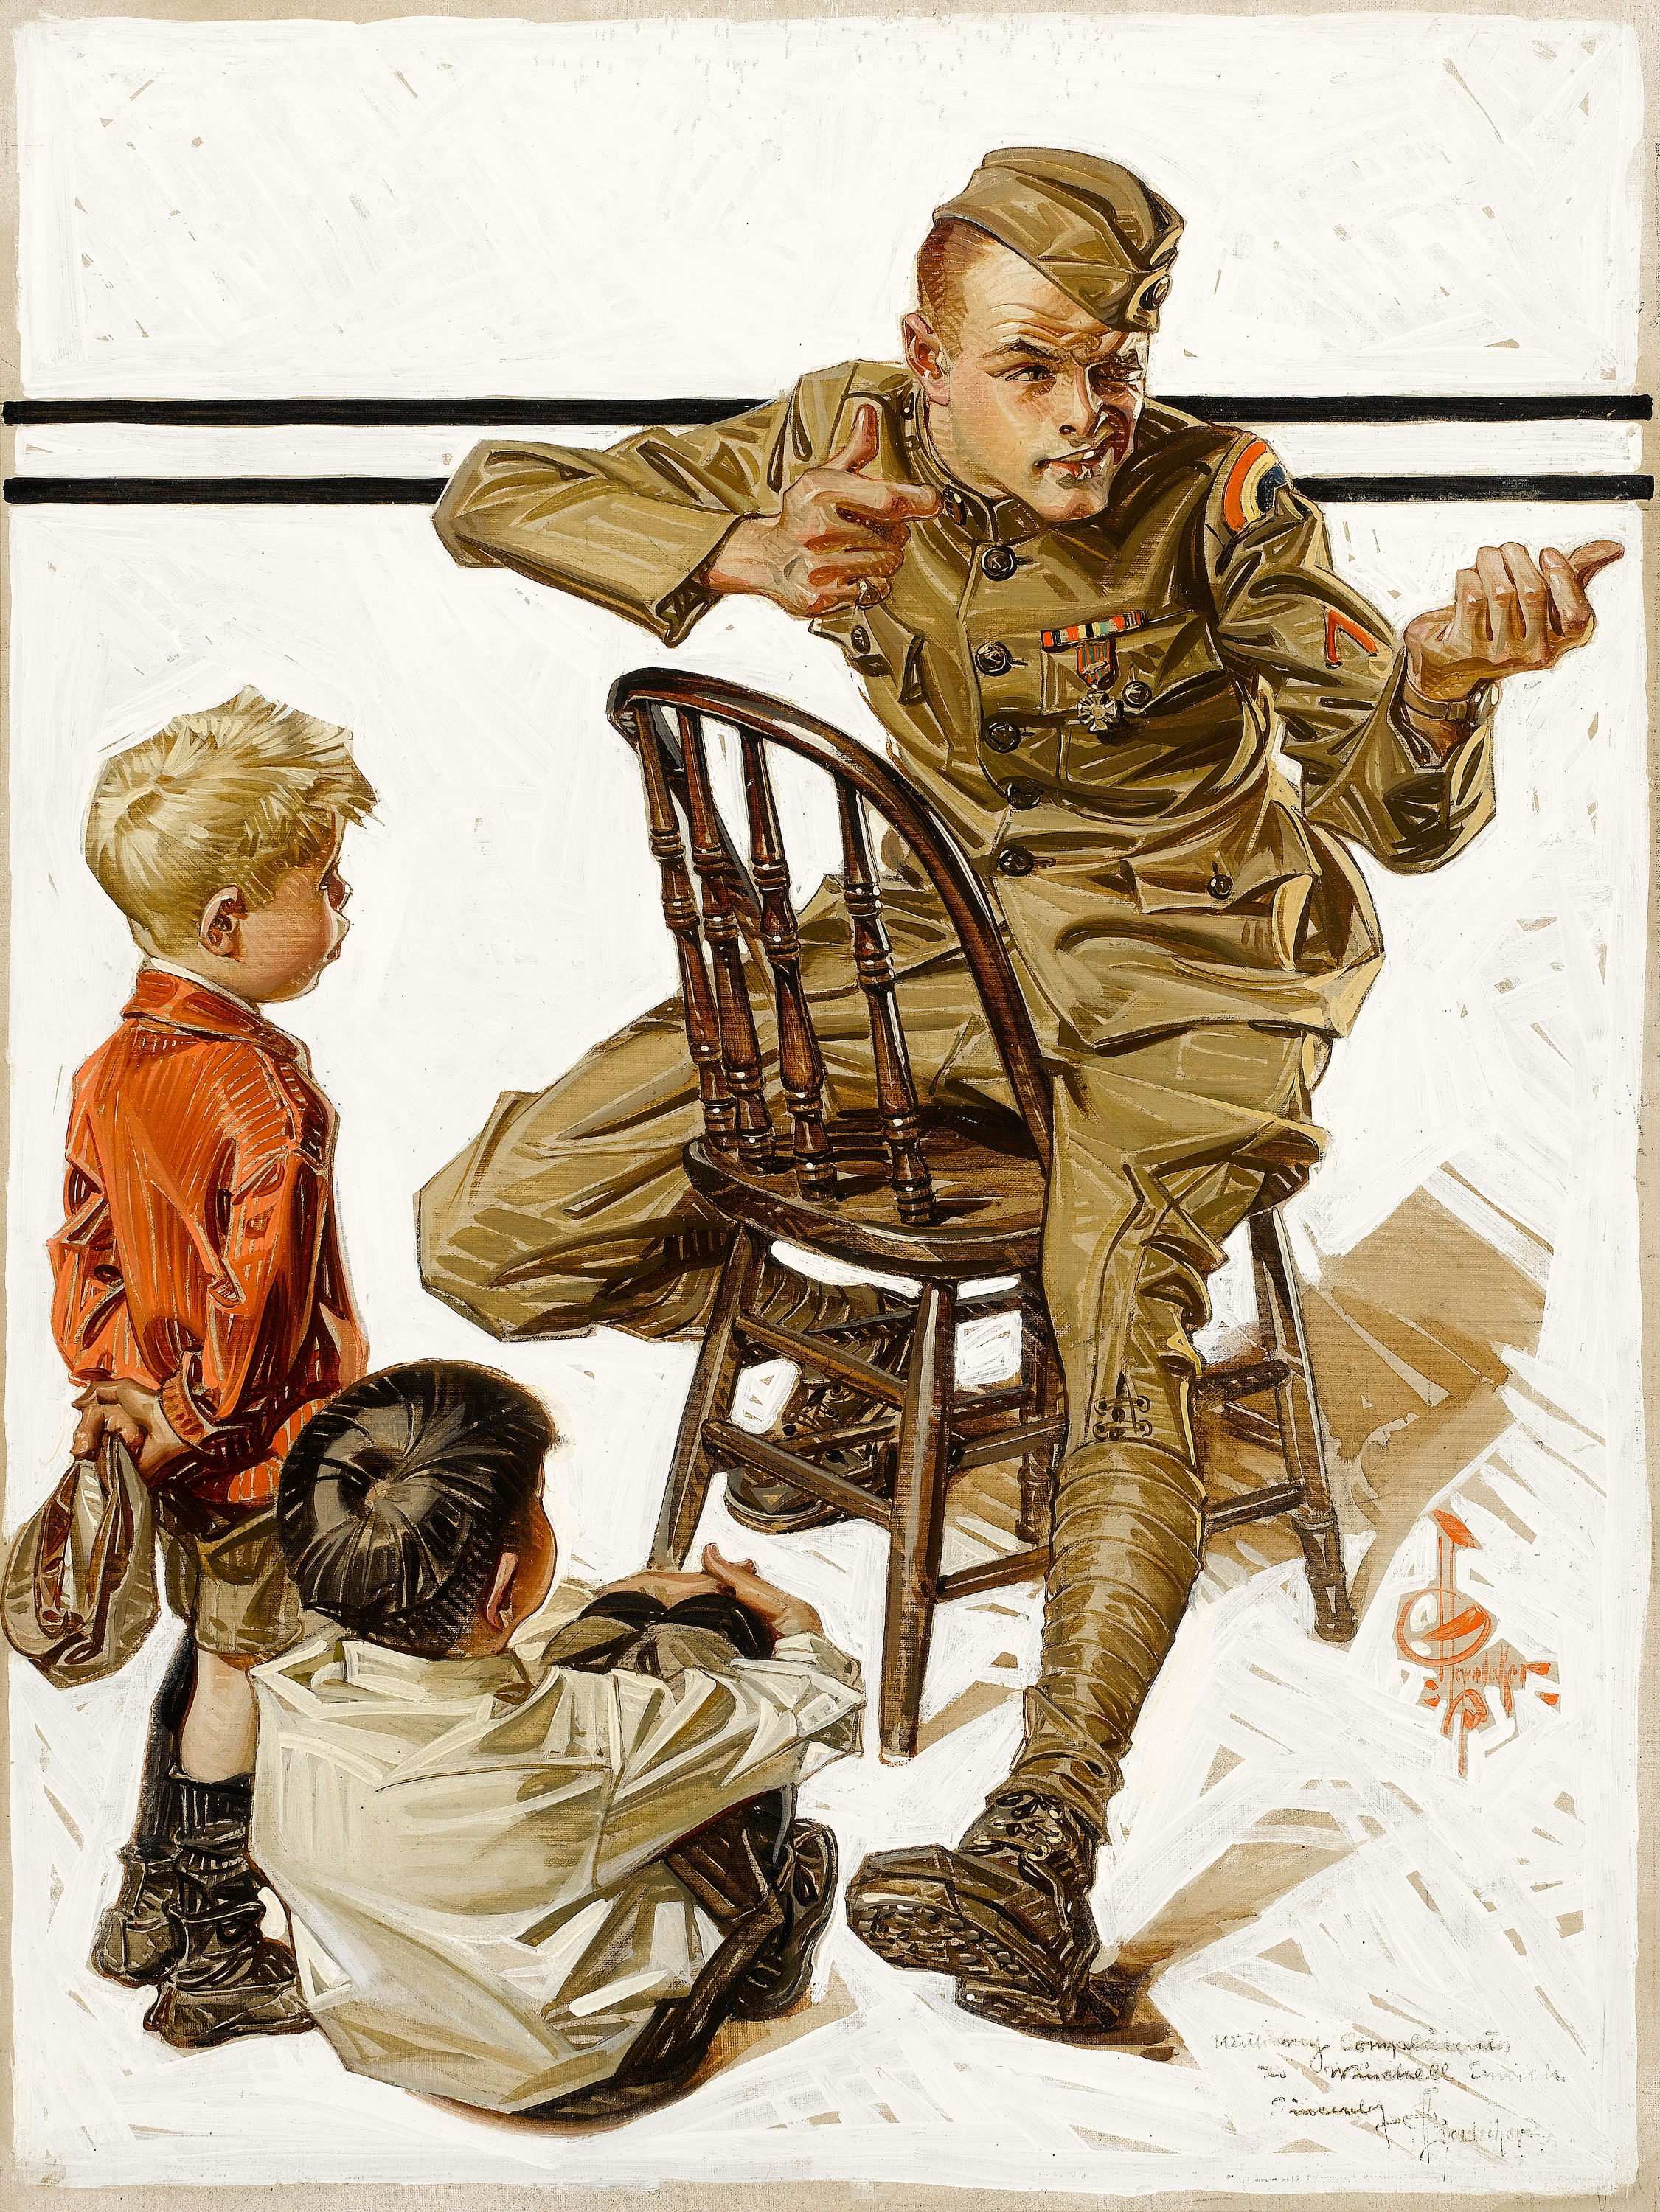 General 2251x3000 soldier children Joseph Christian Leyendecker portrait display digital art chair sitting hat uniform military uniform medallion shoe sole aiming